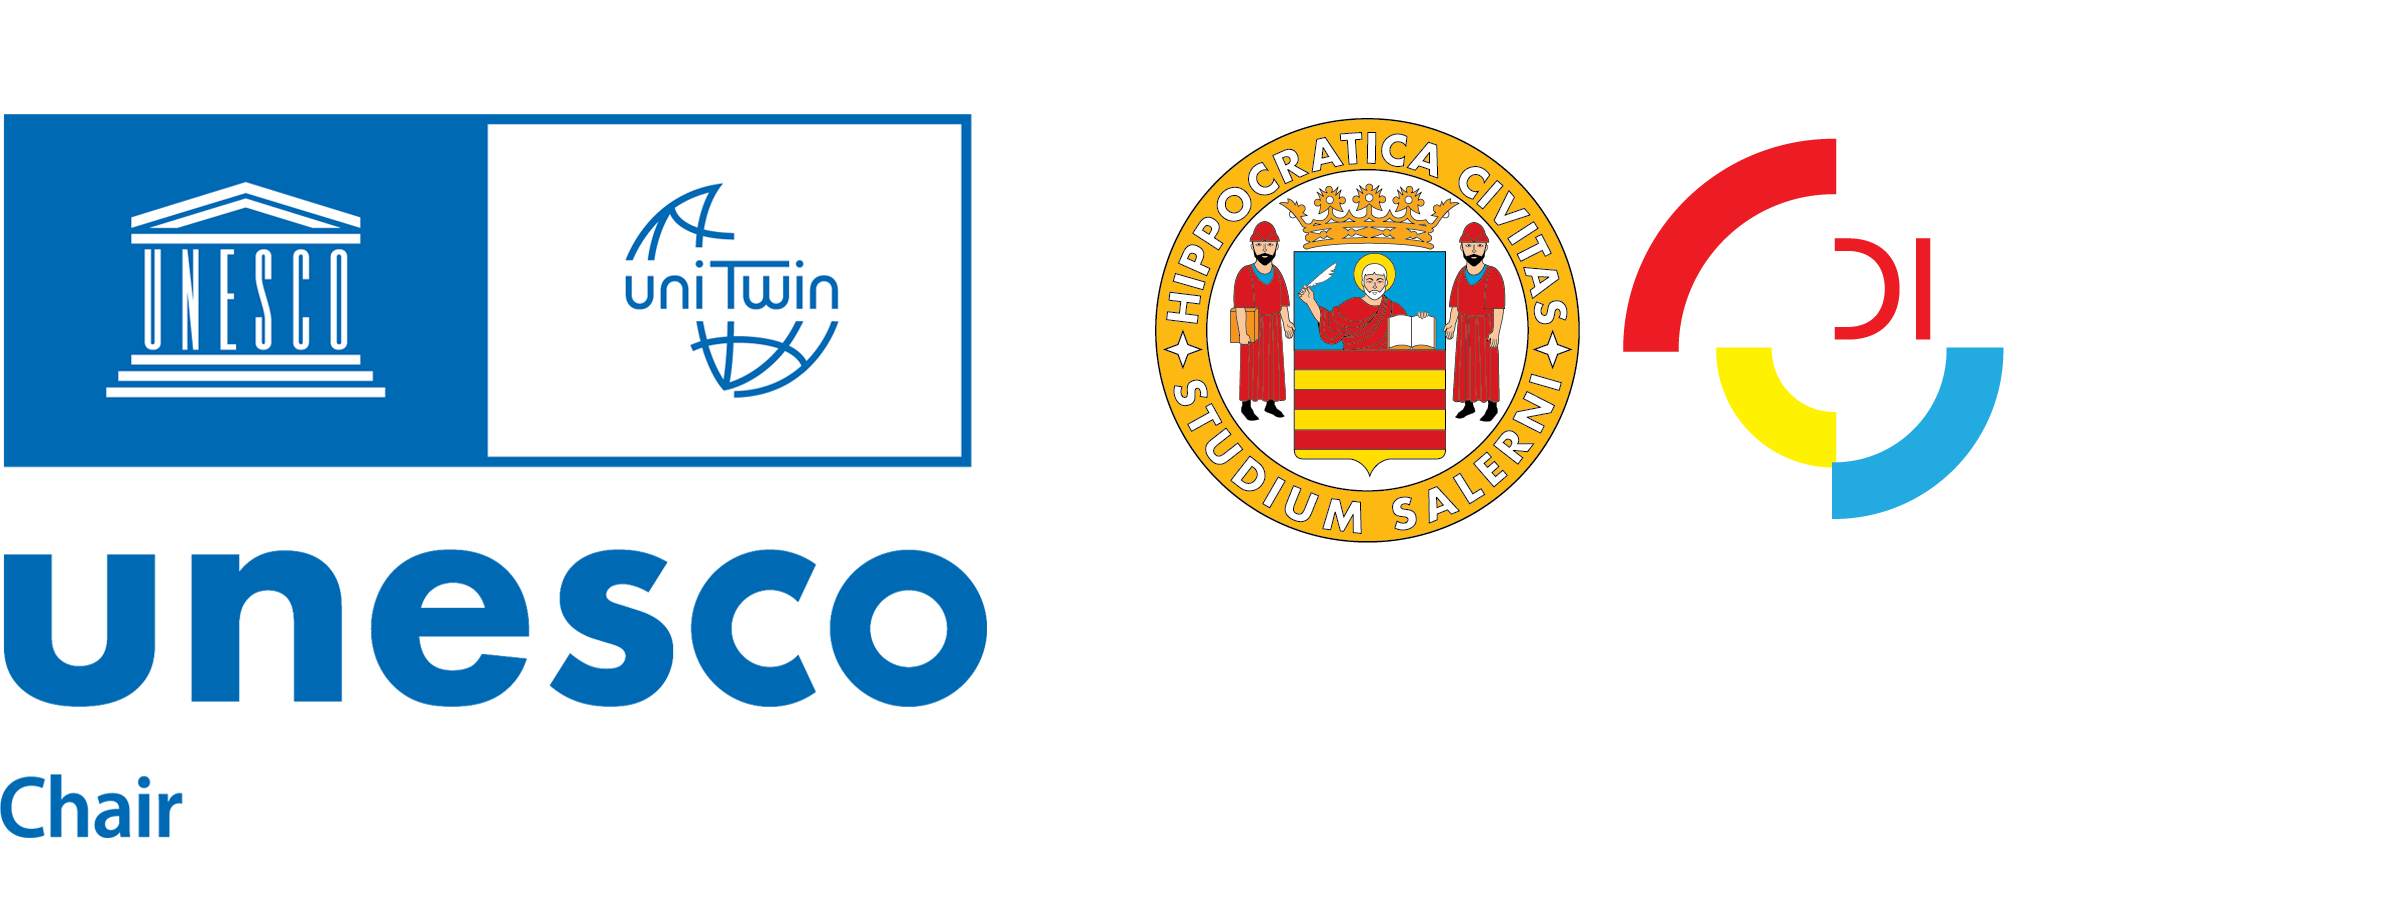 Unesco Chair Salerno-